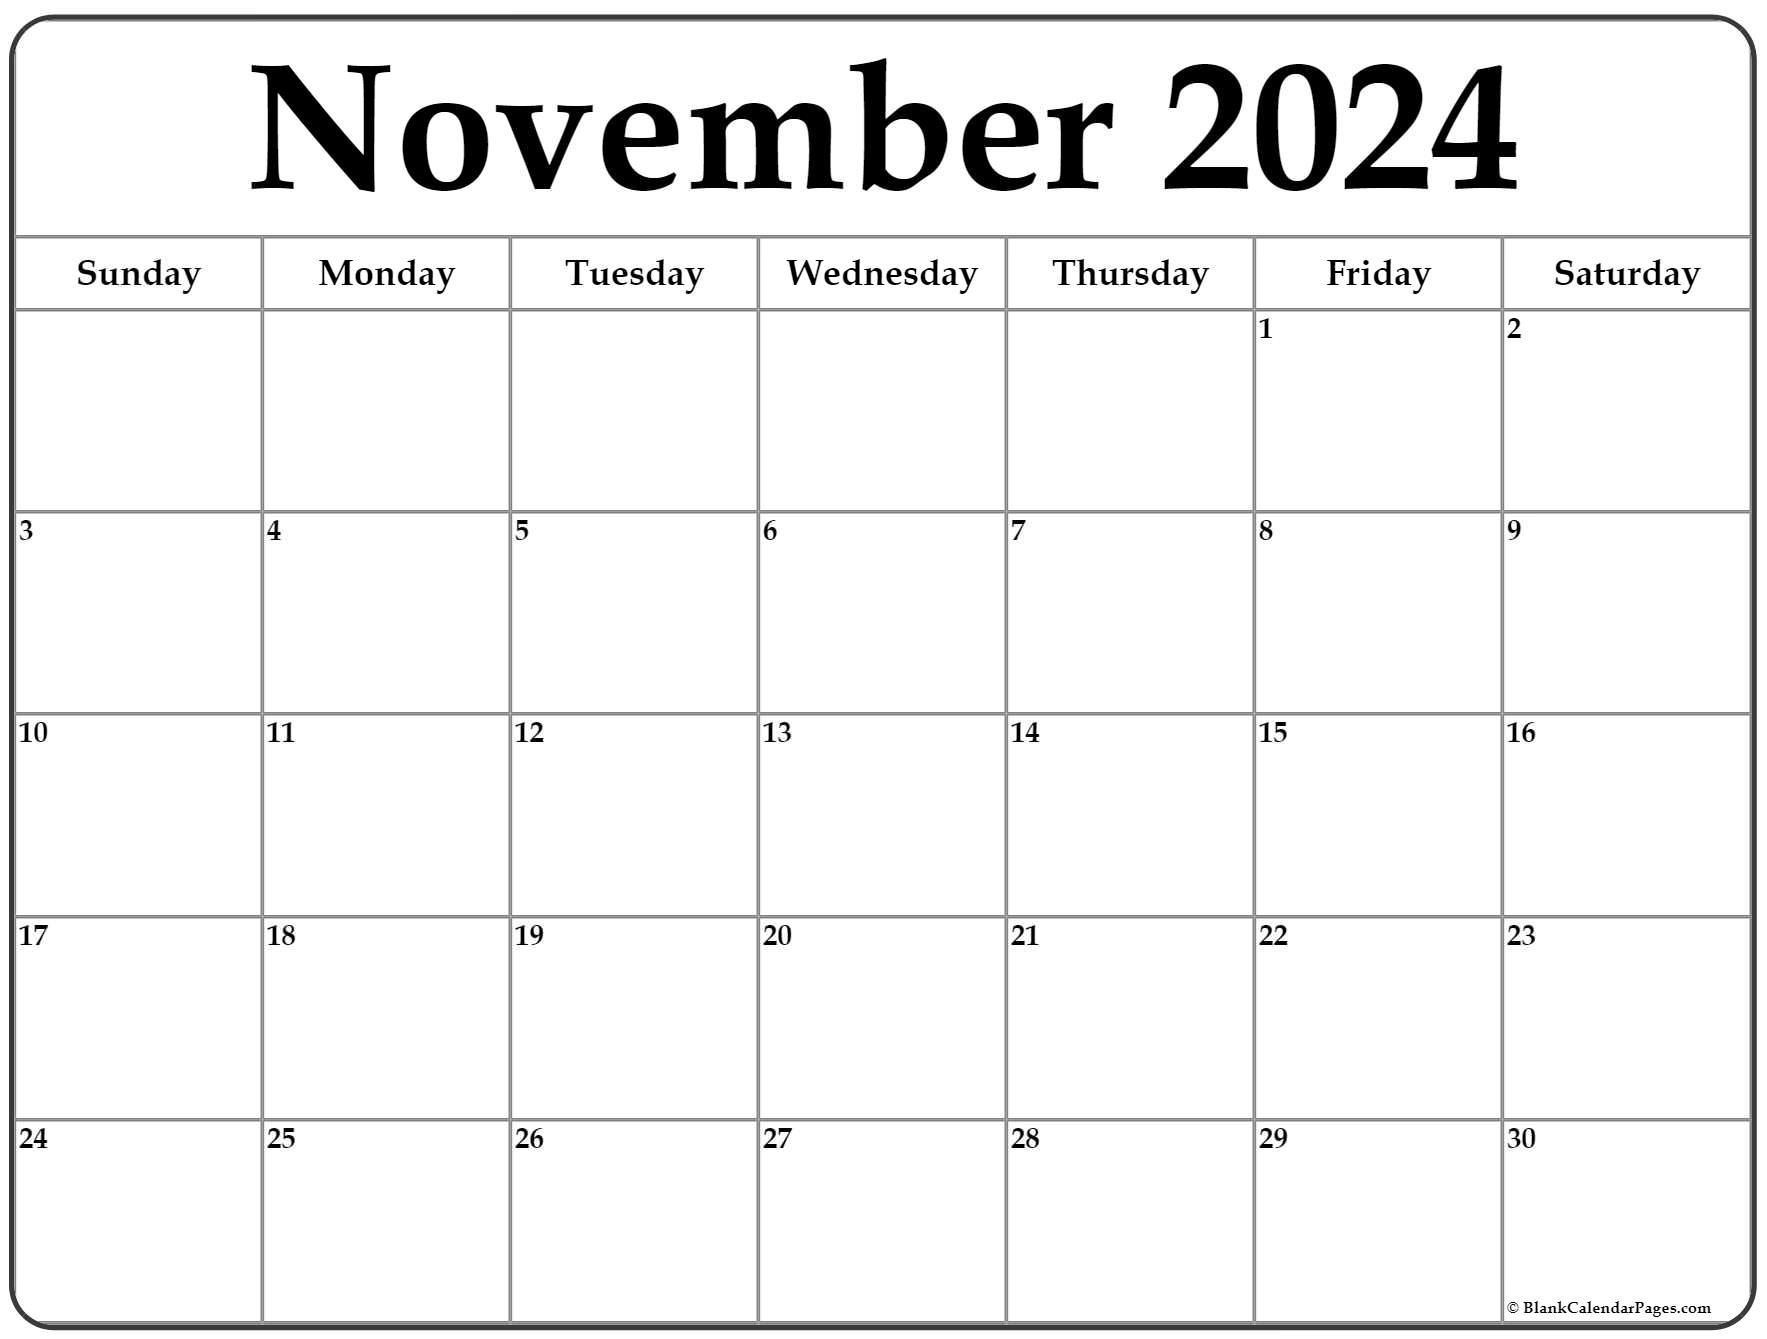 november-2024-calendar-free-printable-calendar